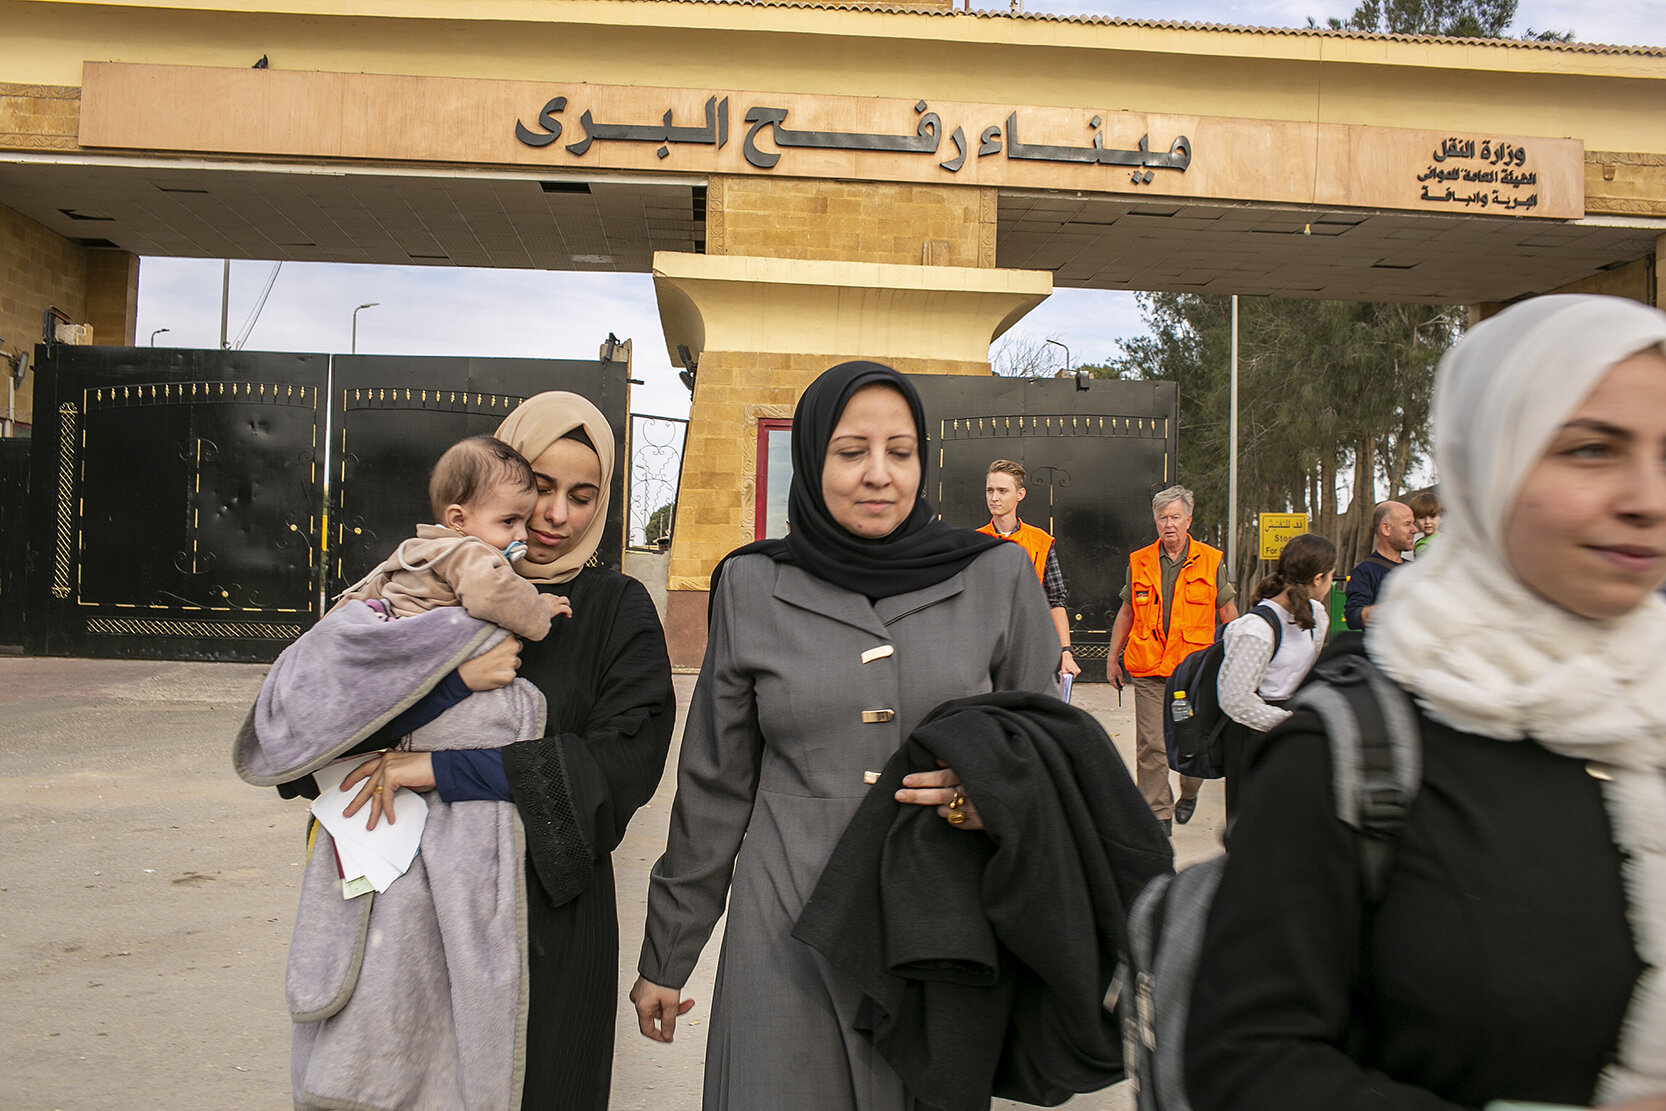 Rafah Grenzübergang (Foto: Asmaa Waguih/Redux/laif)